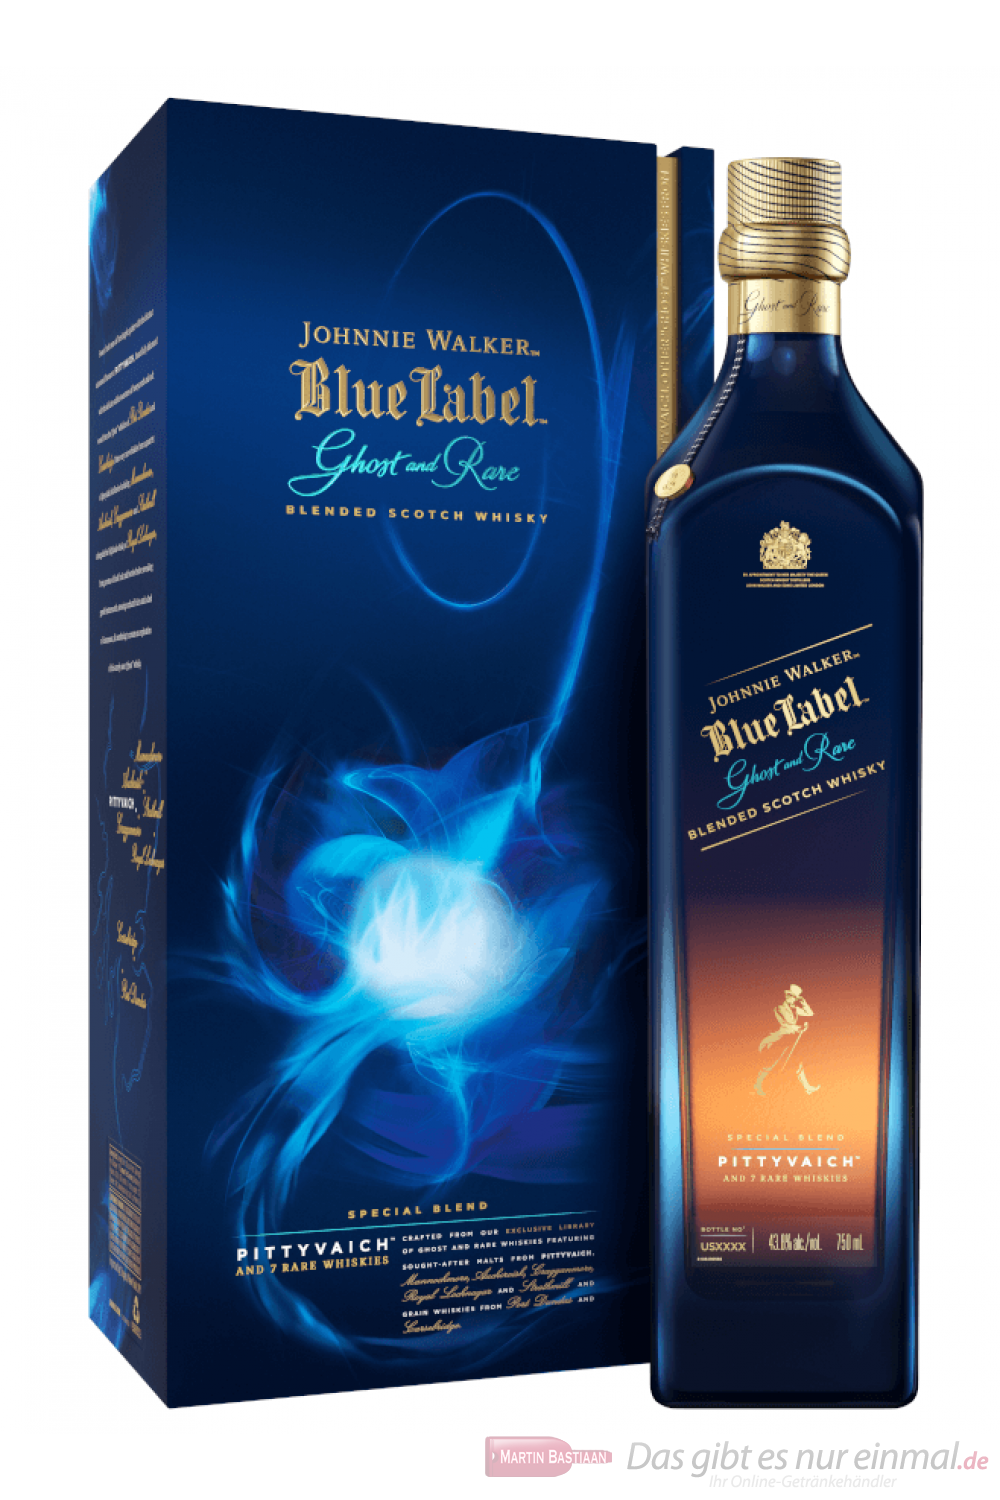 Johnnie Walker Blue Label Ghost & Rare Pittyvaich Edition Whisky 0,7l